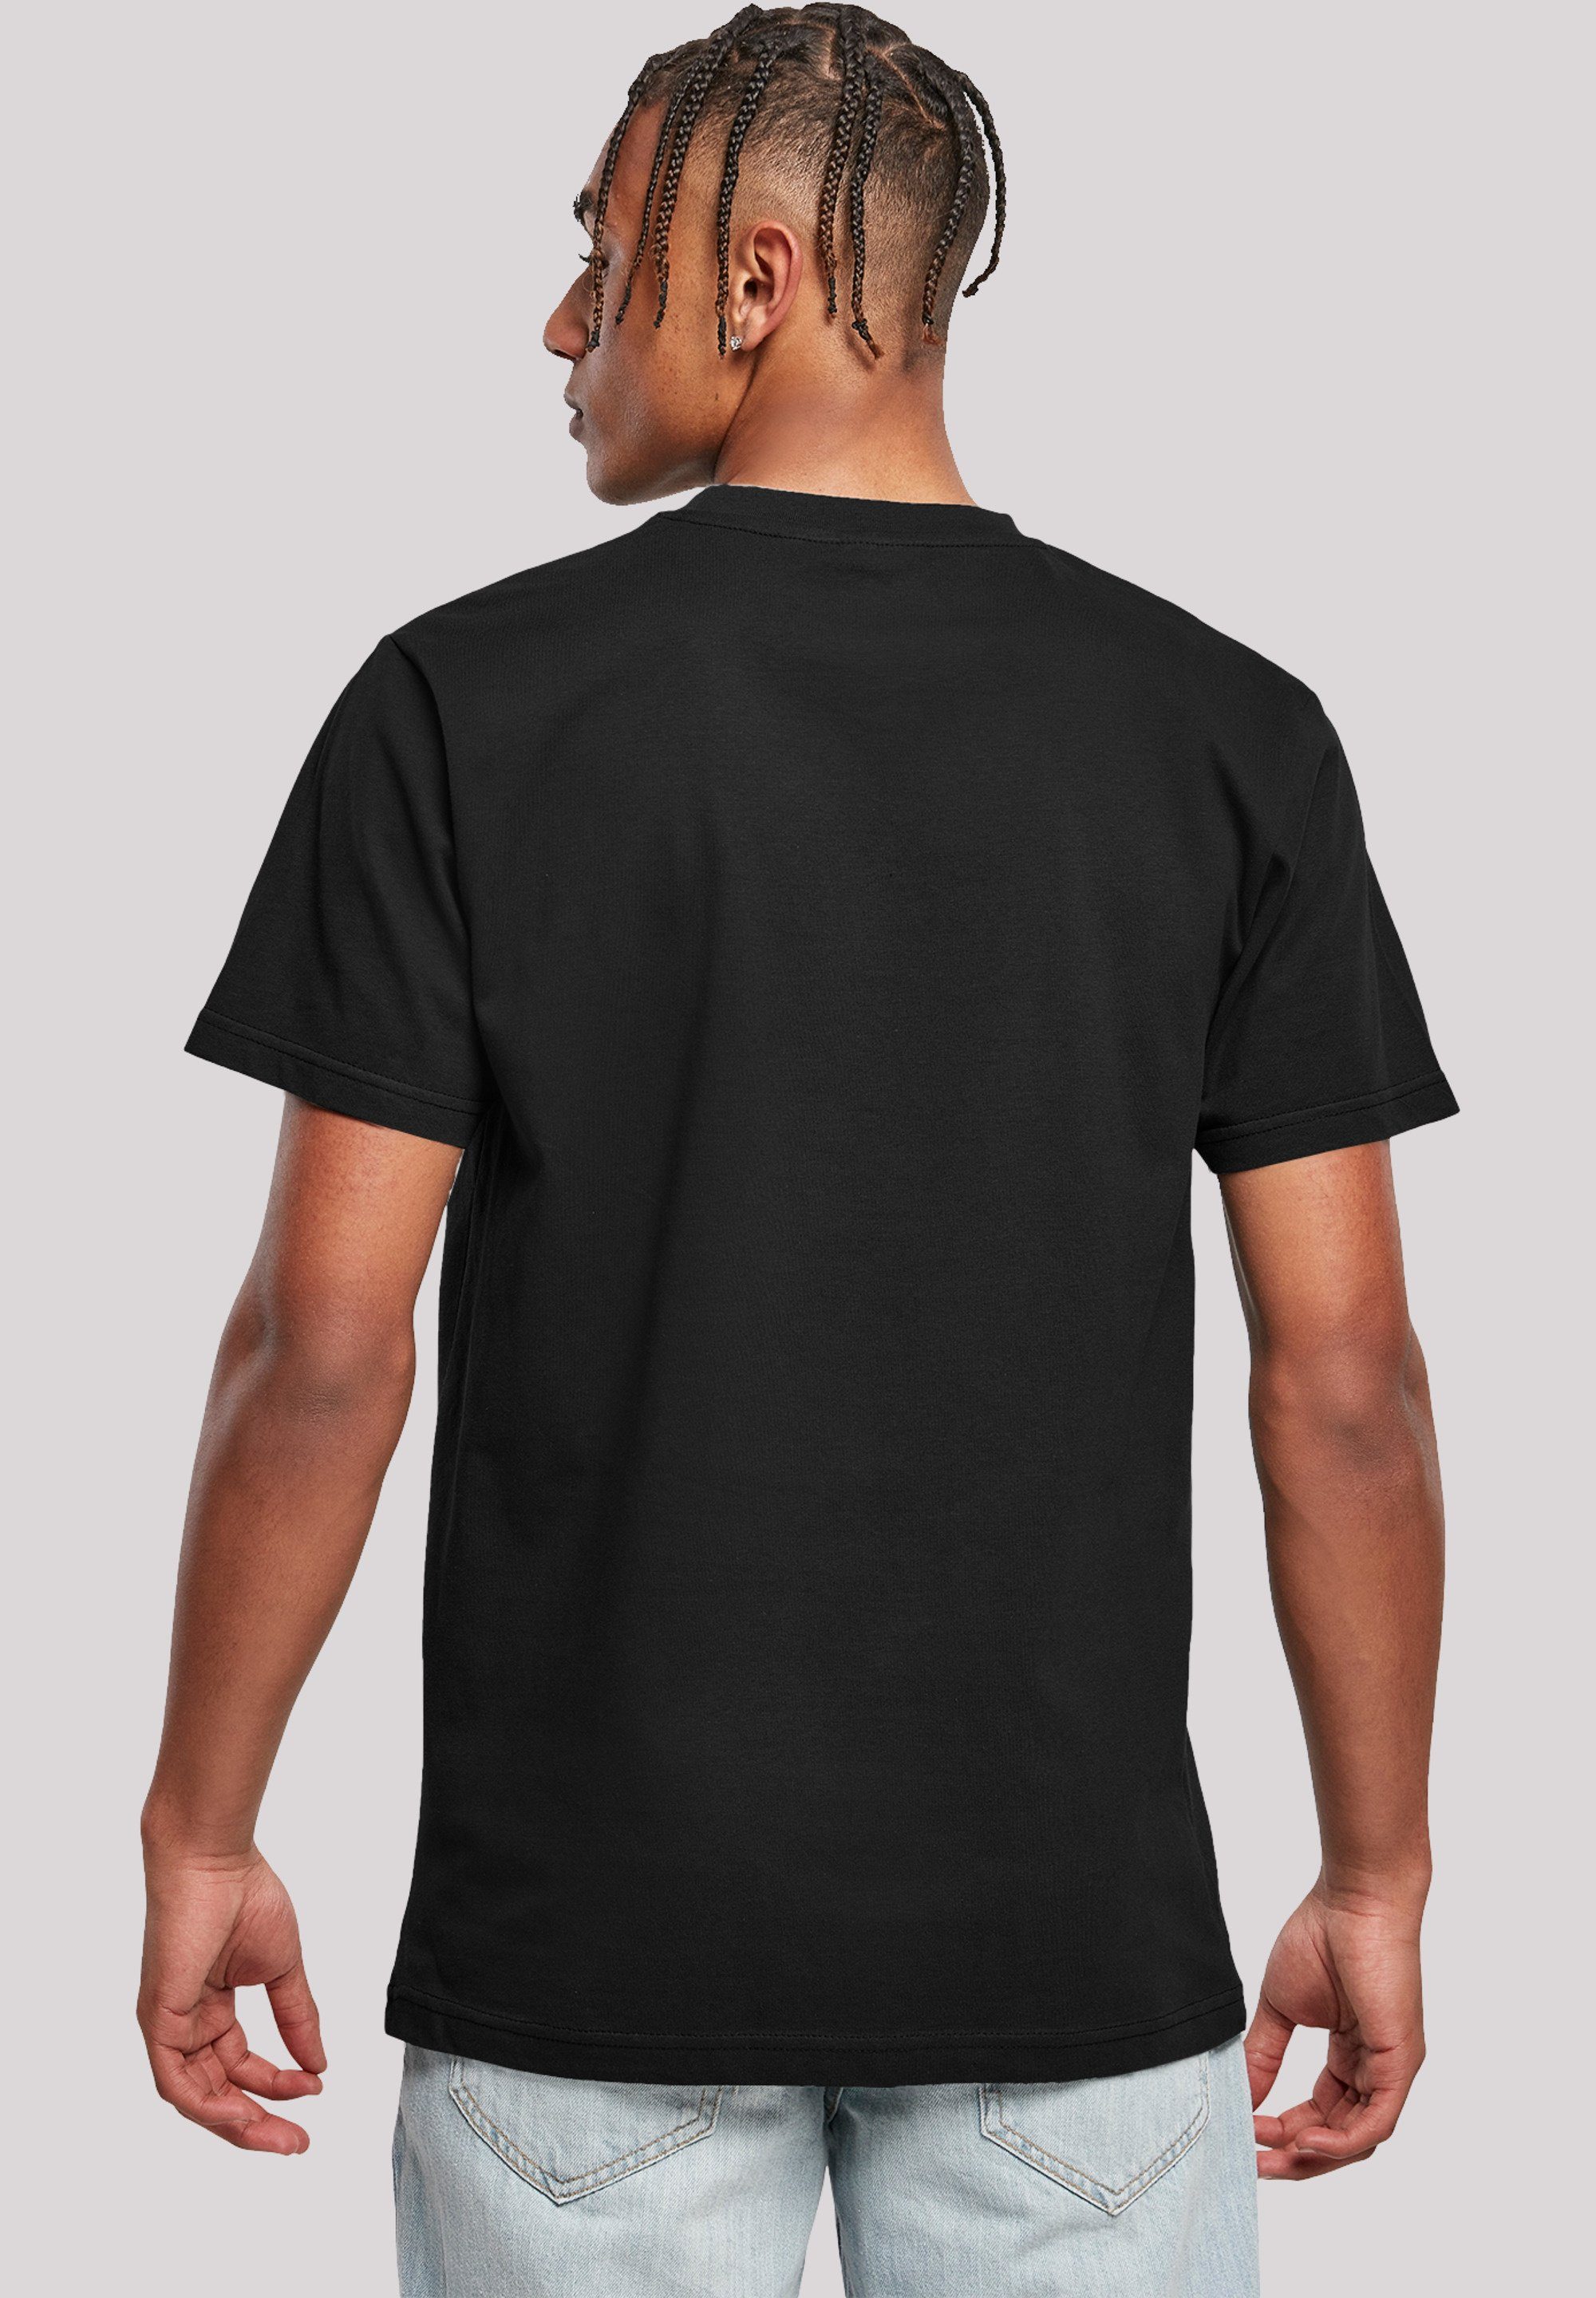 F4NT4STIC T-Shirt Disney Winnie Classic Herren,Premium schwarz Pooh The Merch,Regular-Fit,Basic,Bedruckt